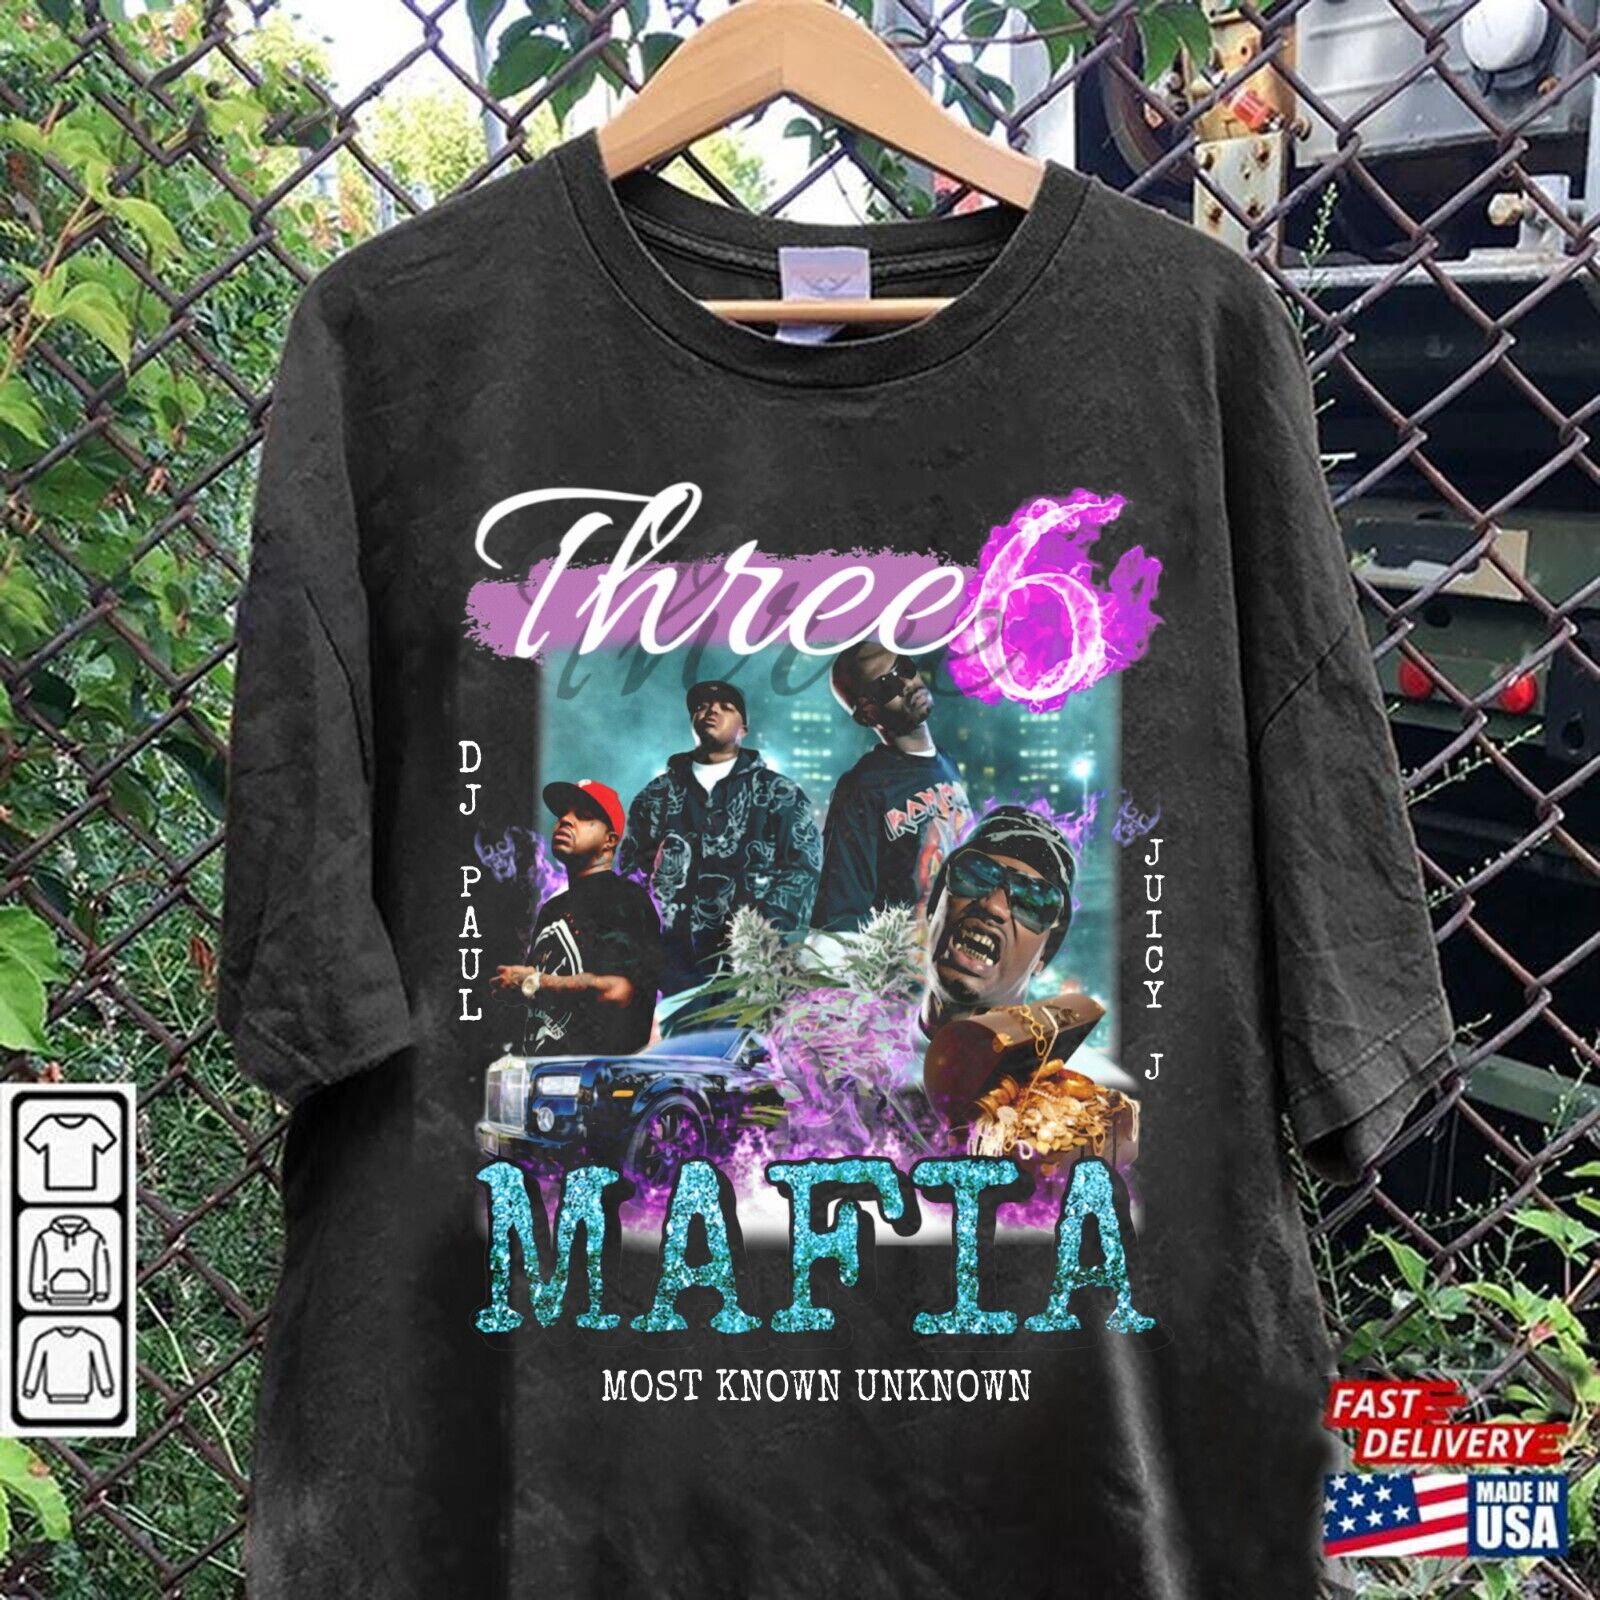 New Popular Three 6 Mafia Word Tour New Rare Unisex S-5XL T-Shirt 4D938 FREESHIP